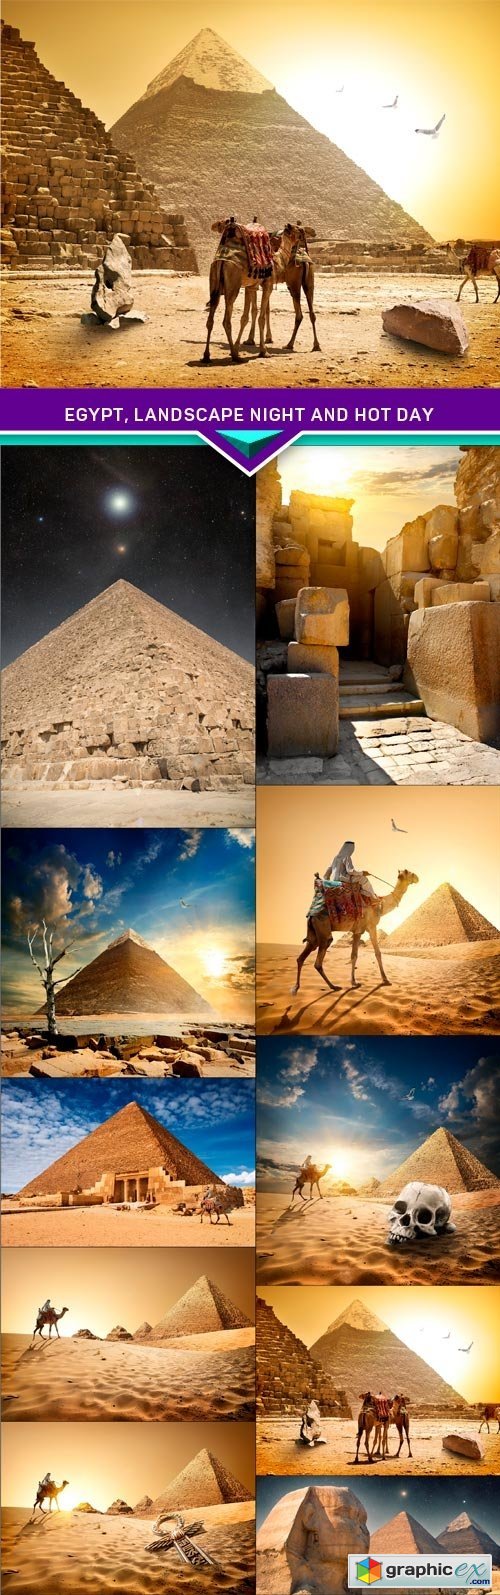 Egypt, landscape night and hot day 10x JPEG